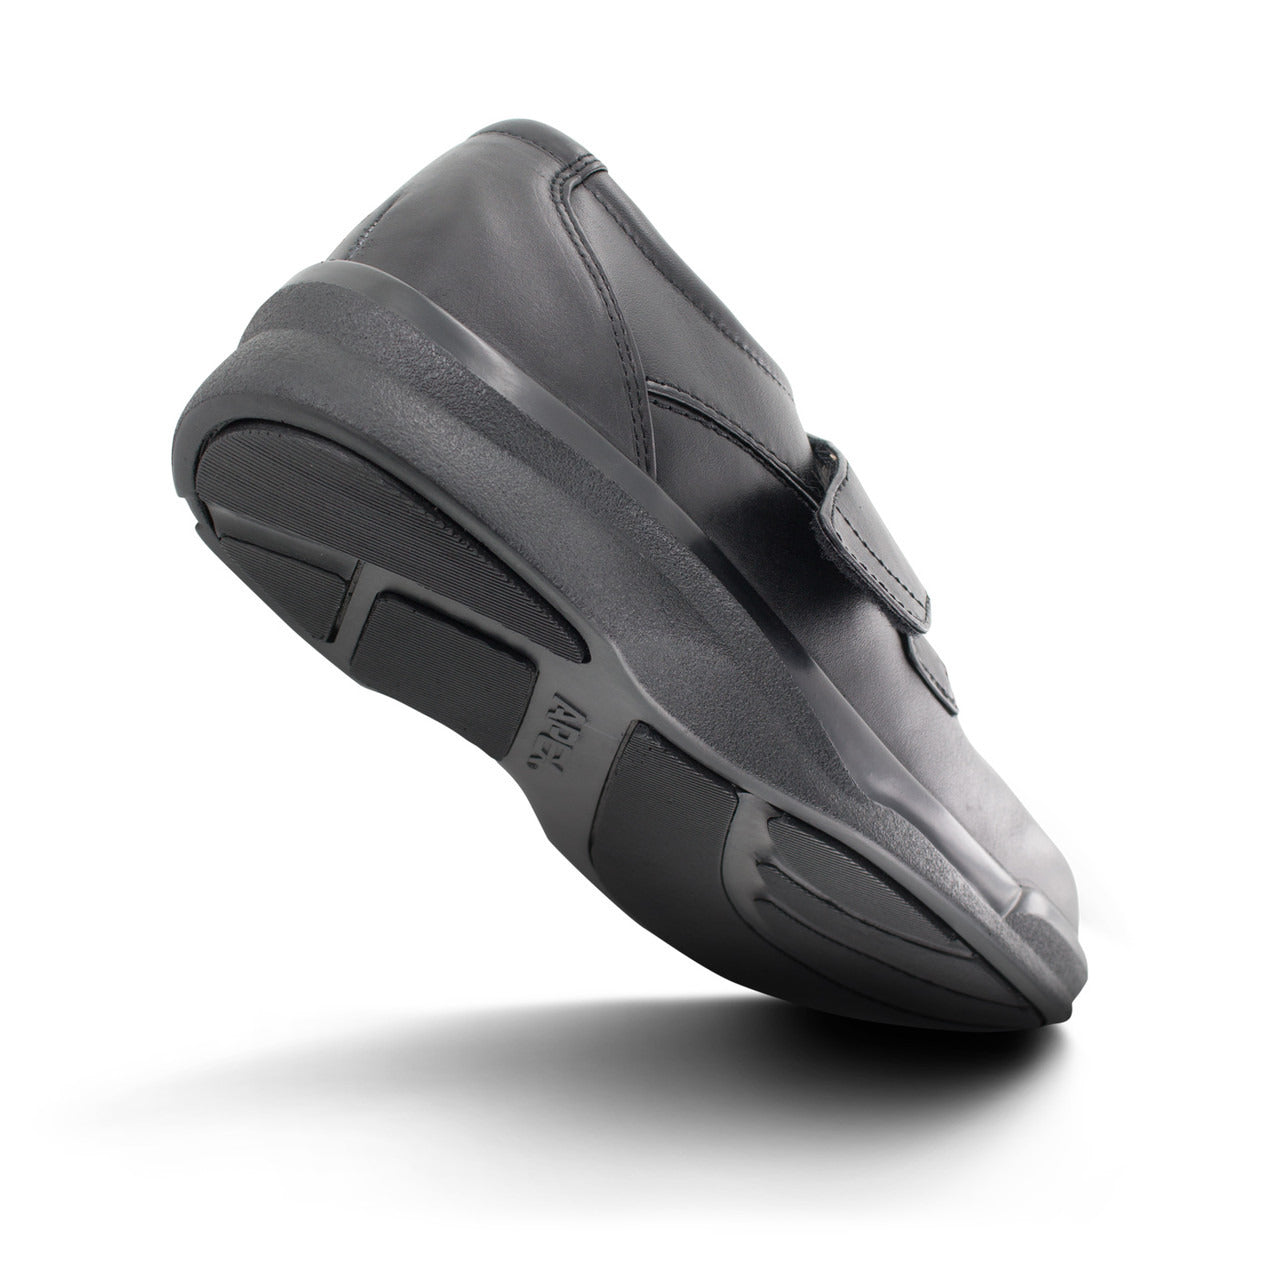 Apexfoot Men's Biomechanical Single Strap Casual Shoe - Black - X-Wide (4E)